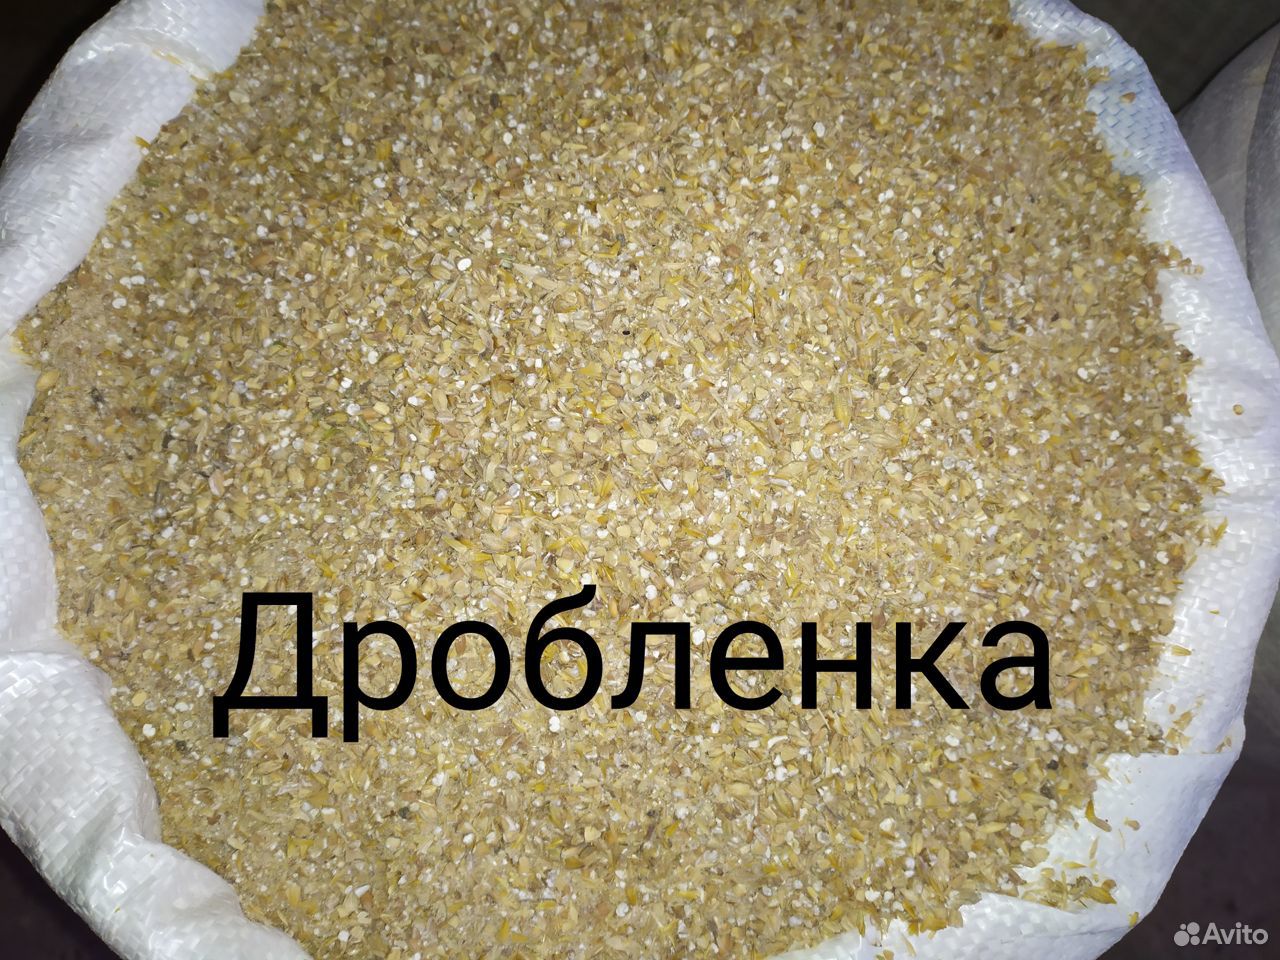 Комбикорм,зерно,дробленка купить на Зозу.ру - фотография № 4